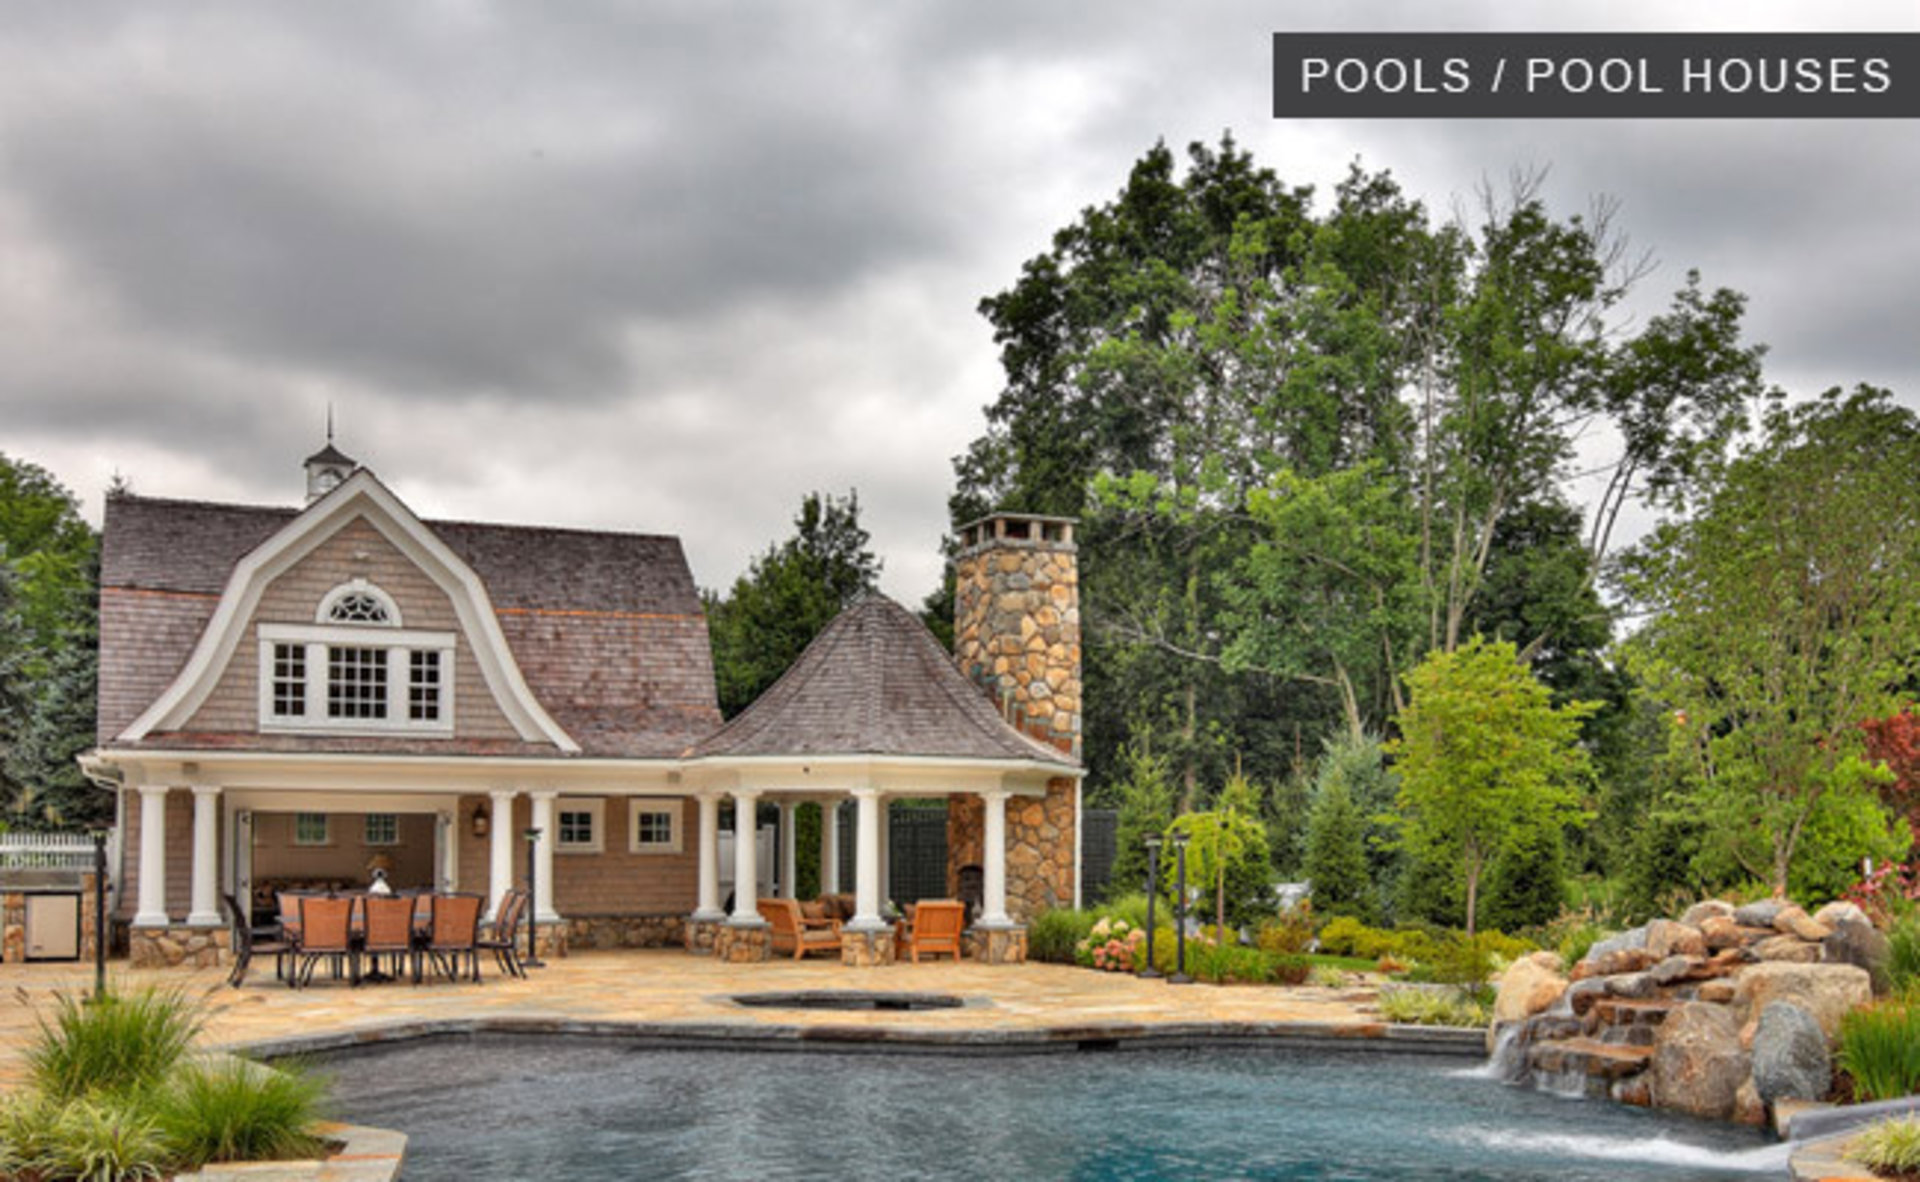 Pools / Pool Houses